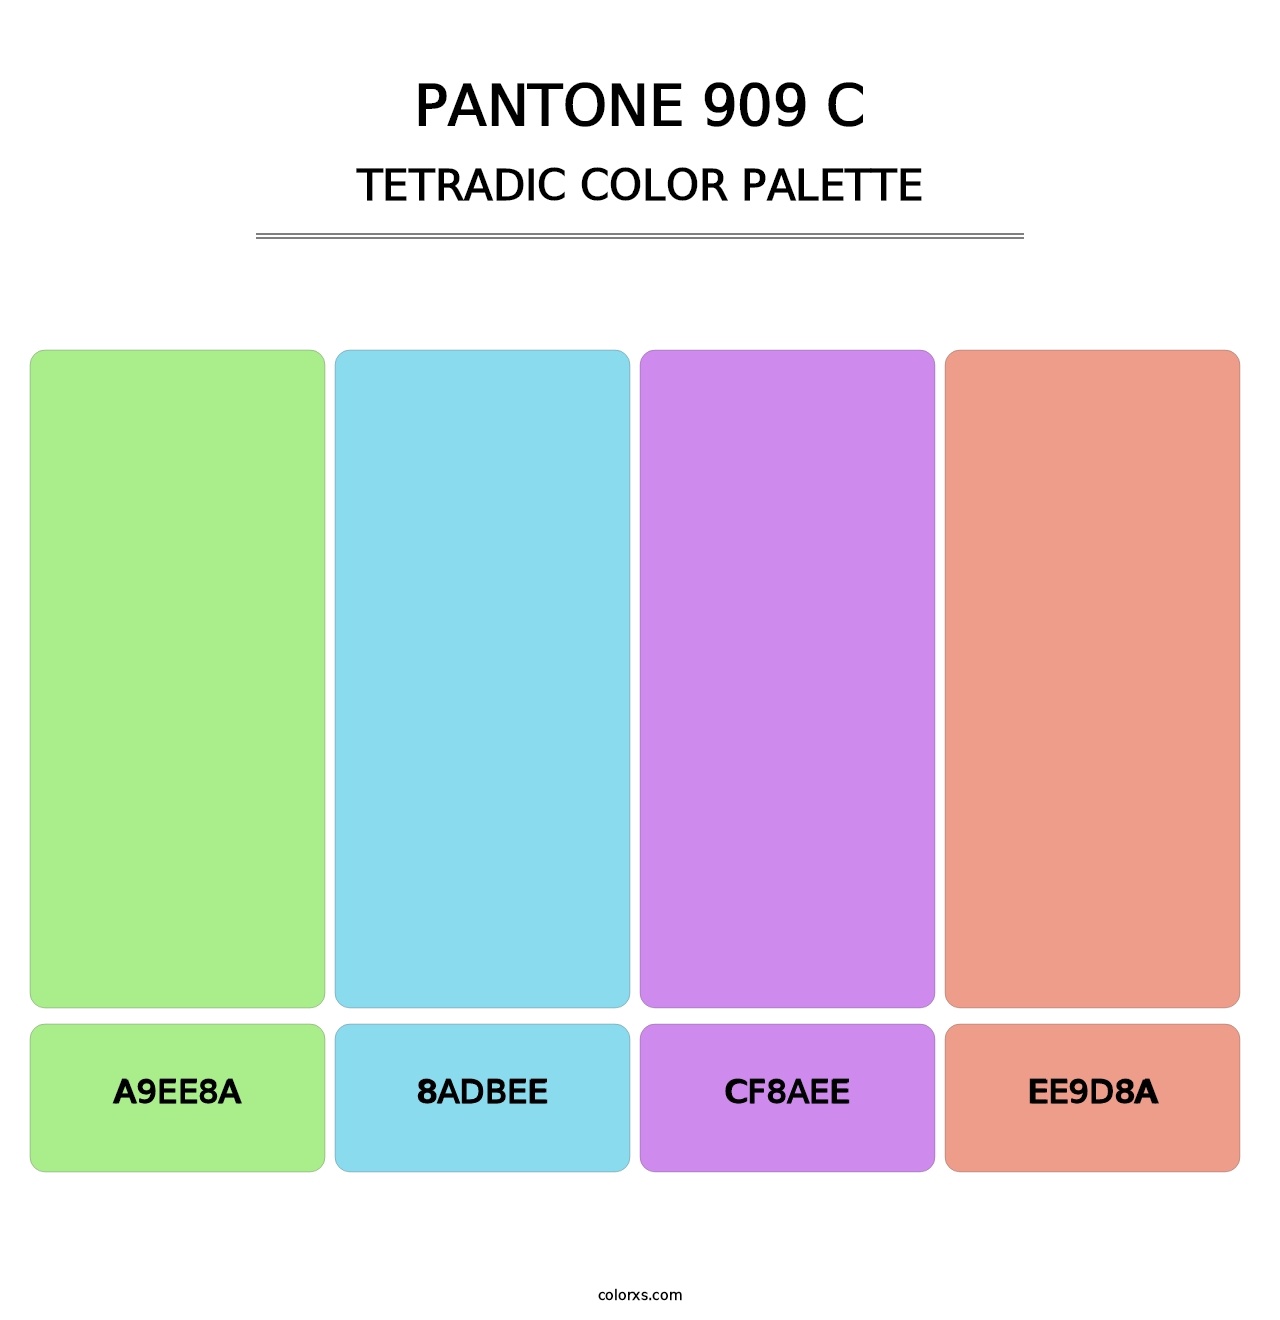 PANTONE 909 C - Tetradic Color Palette